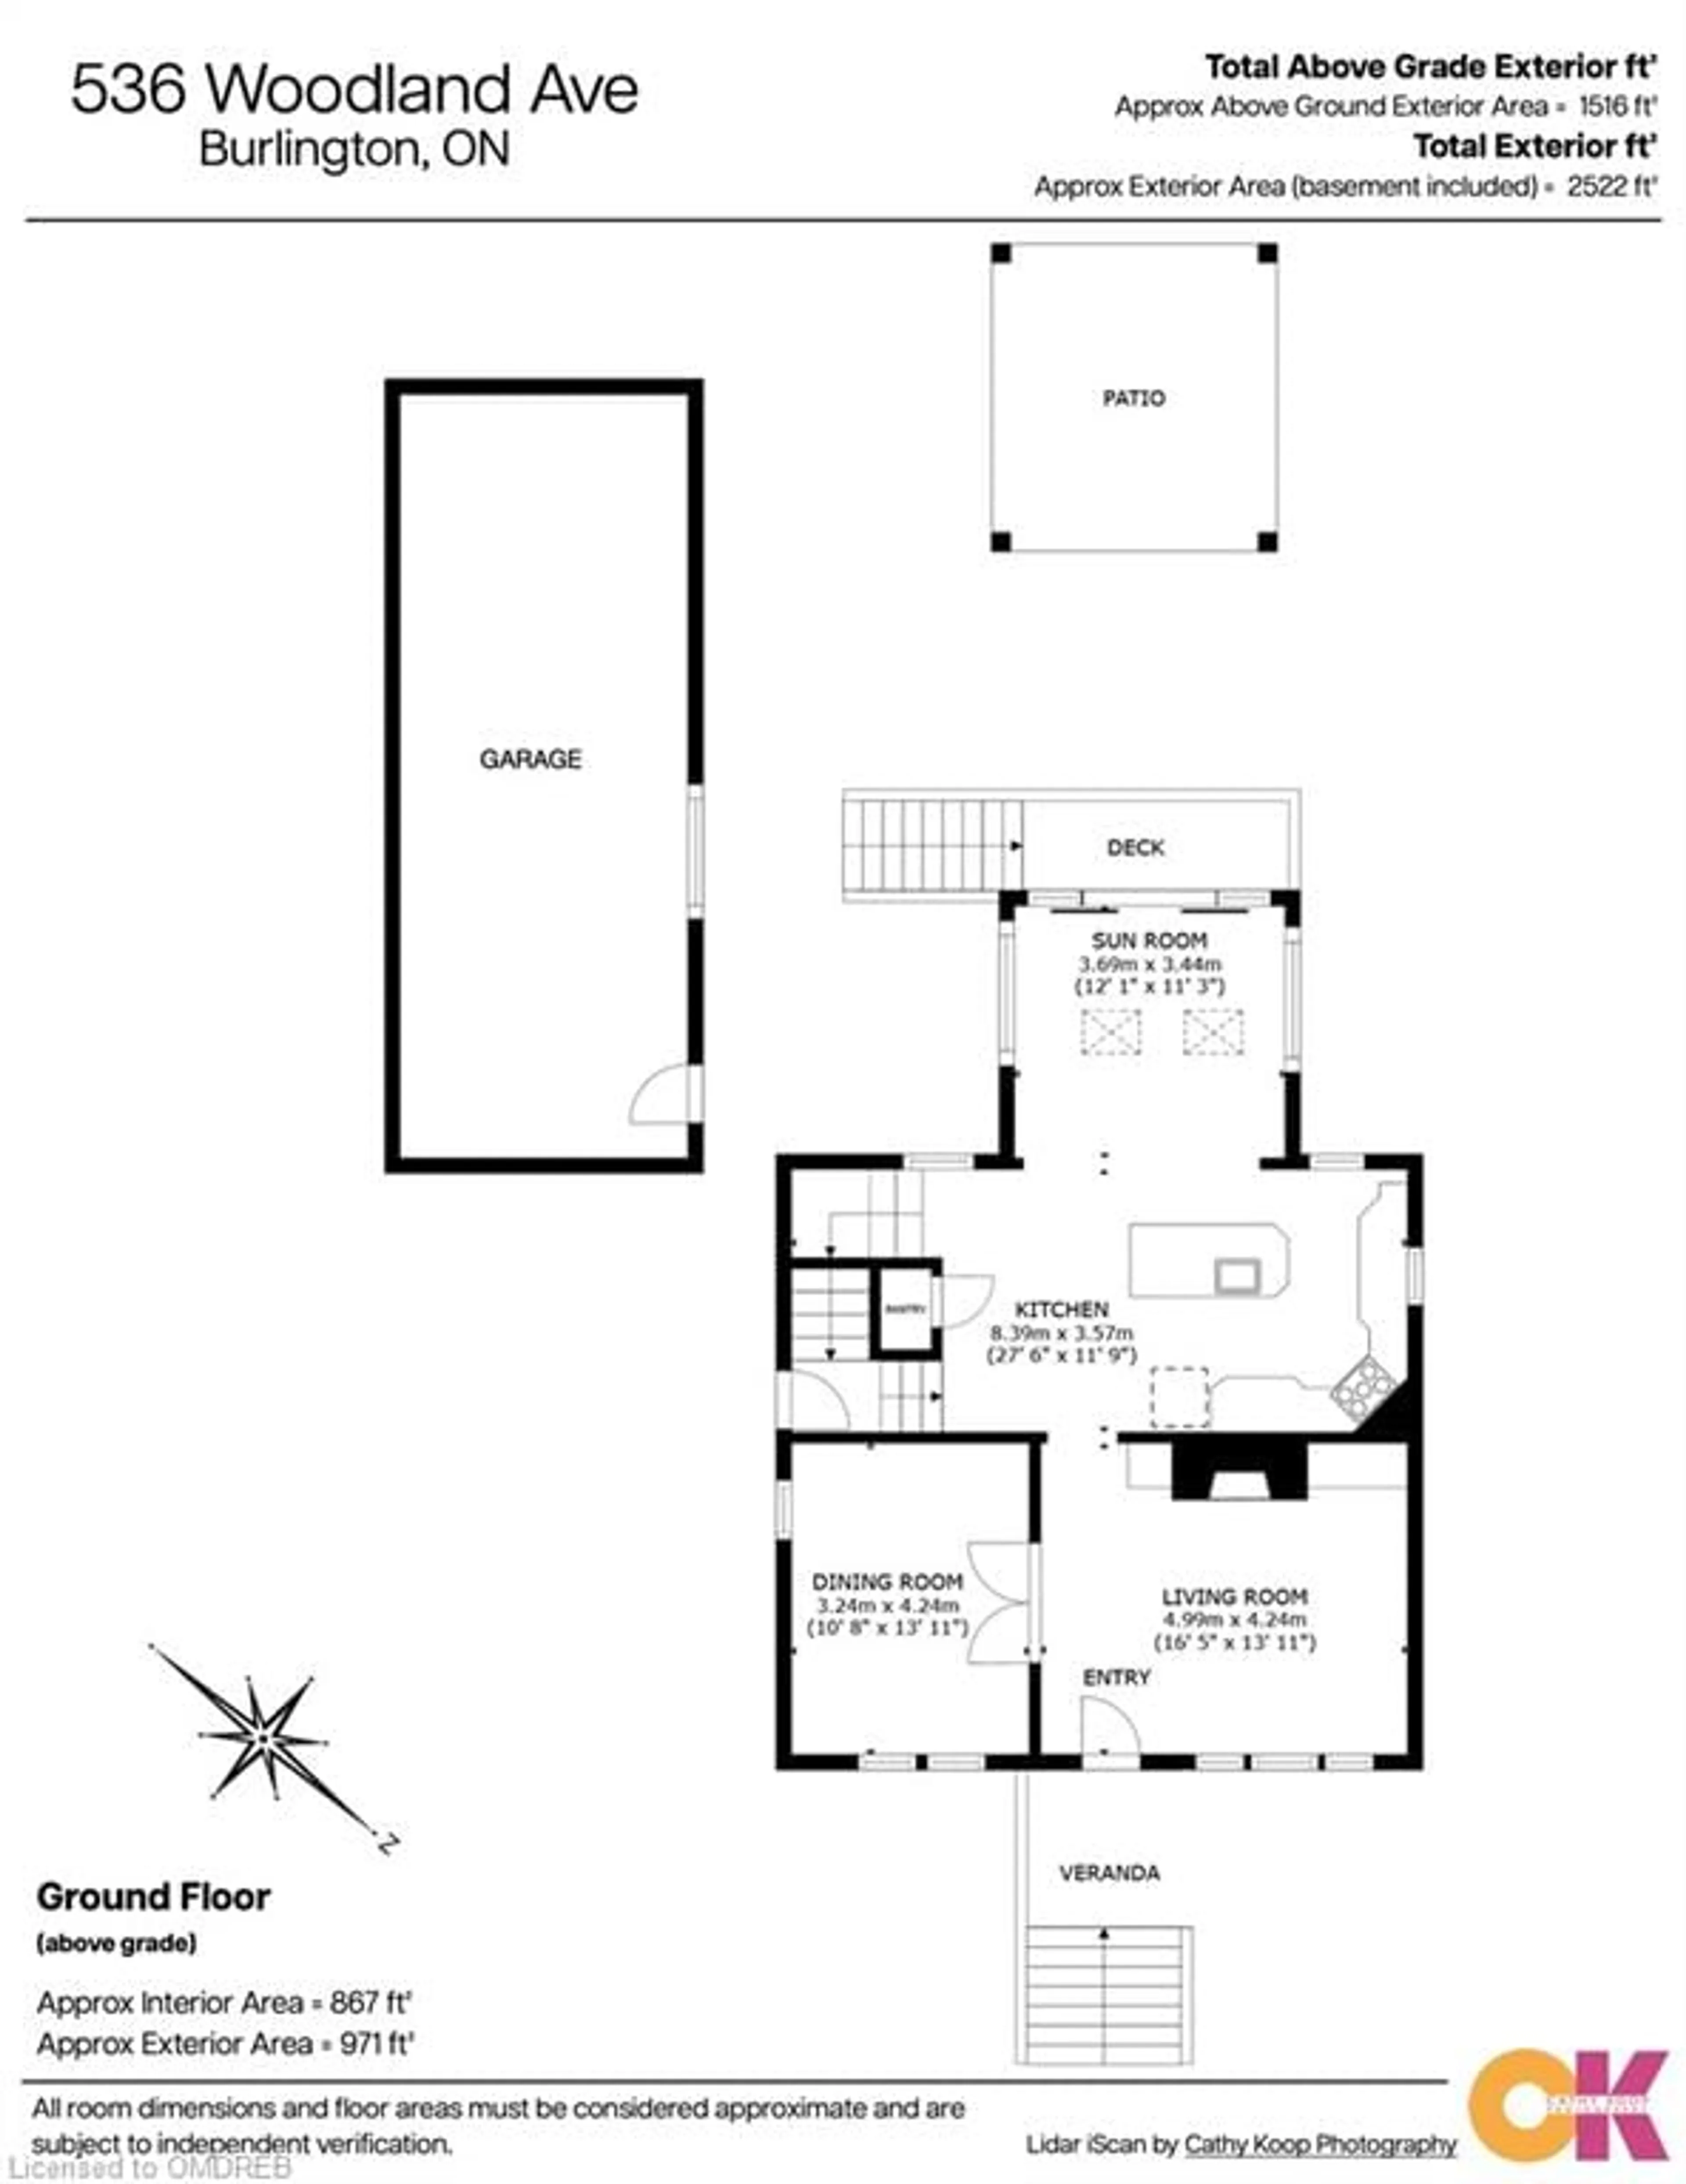 Floor plan for 536 Woodland Ave, Burlington Ontario L7R 2S4